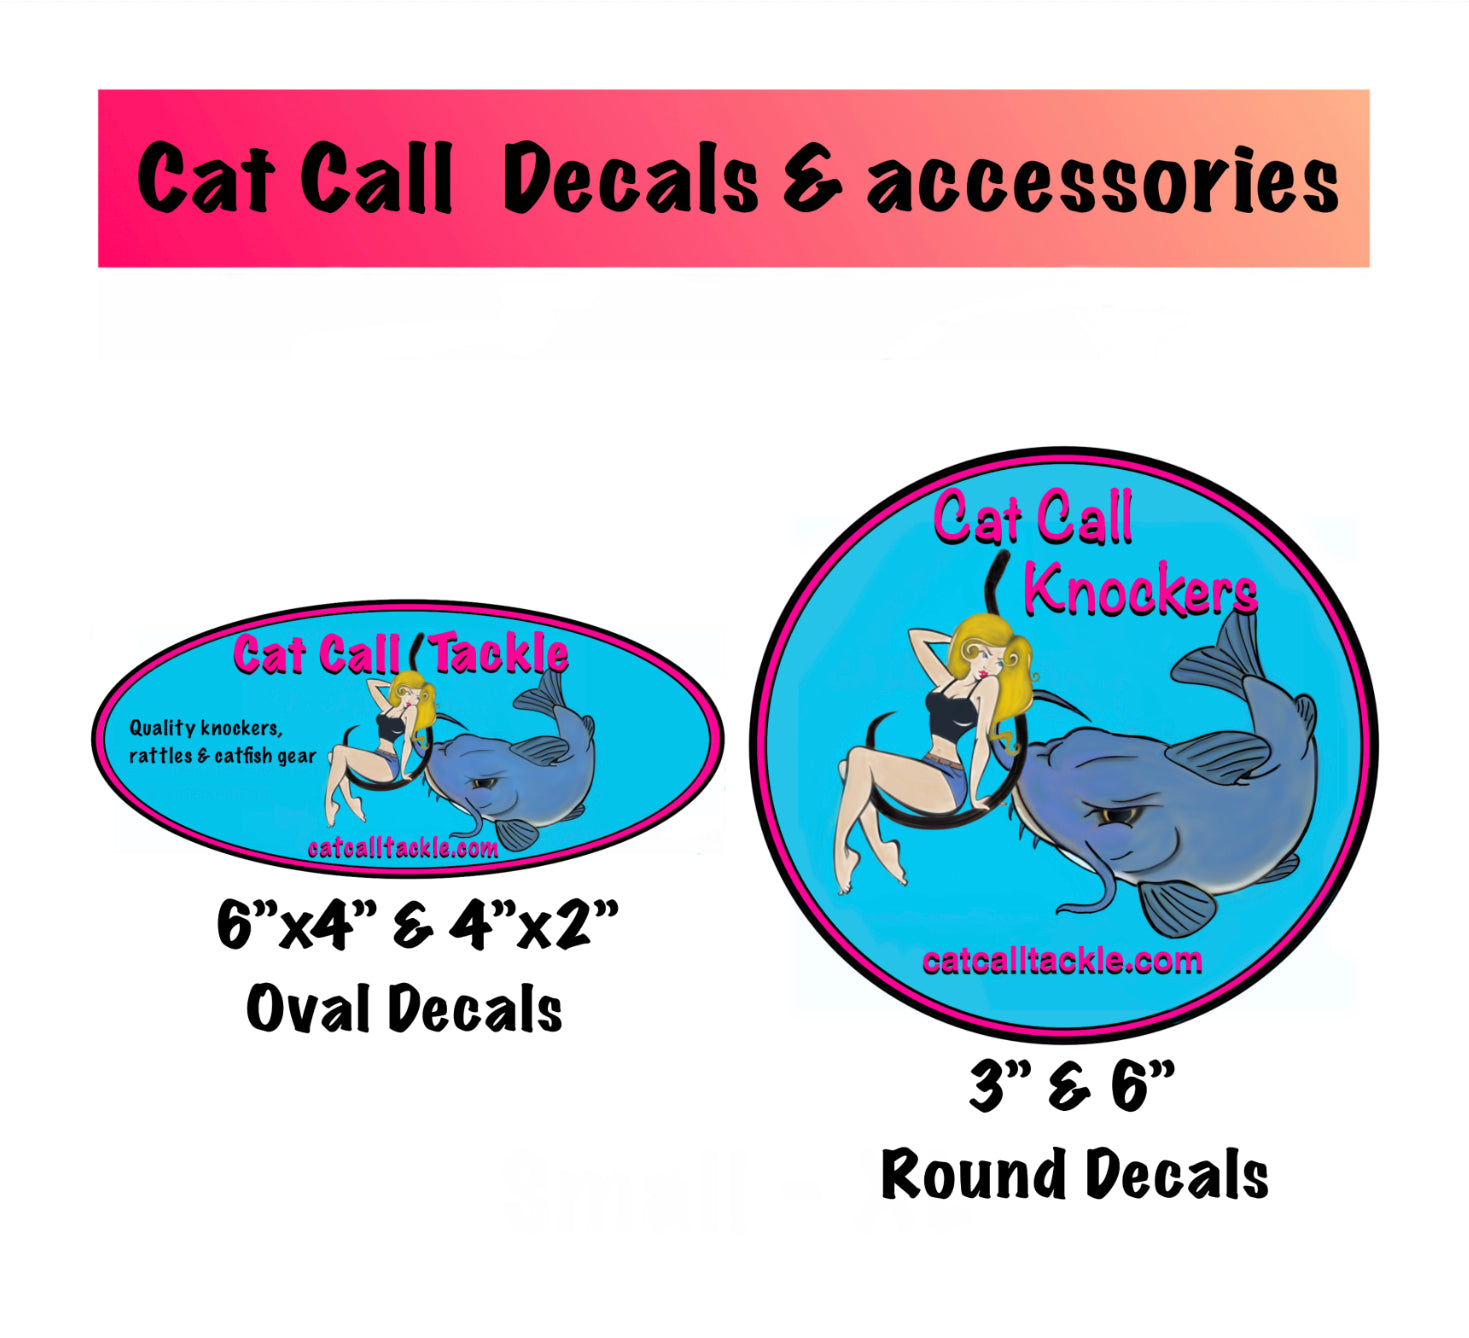 Cat Call Knockers – Cat Call Tackle